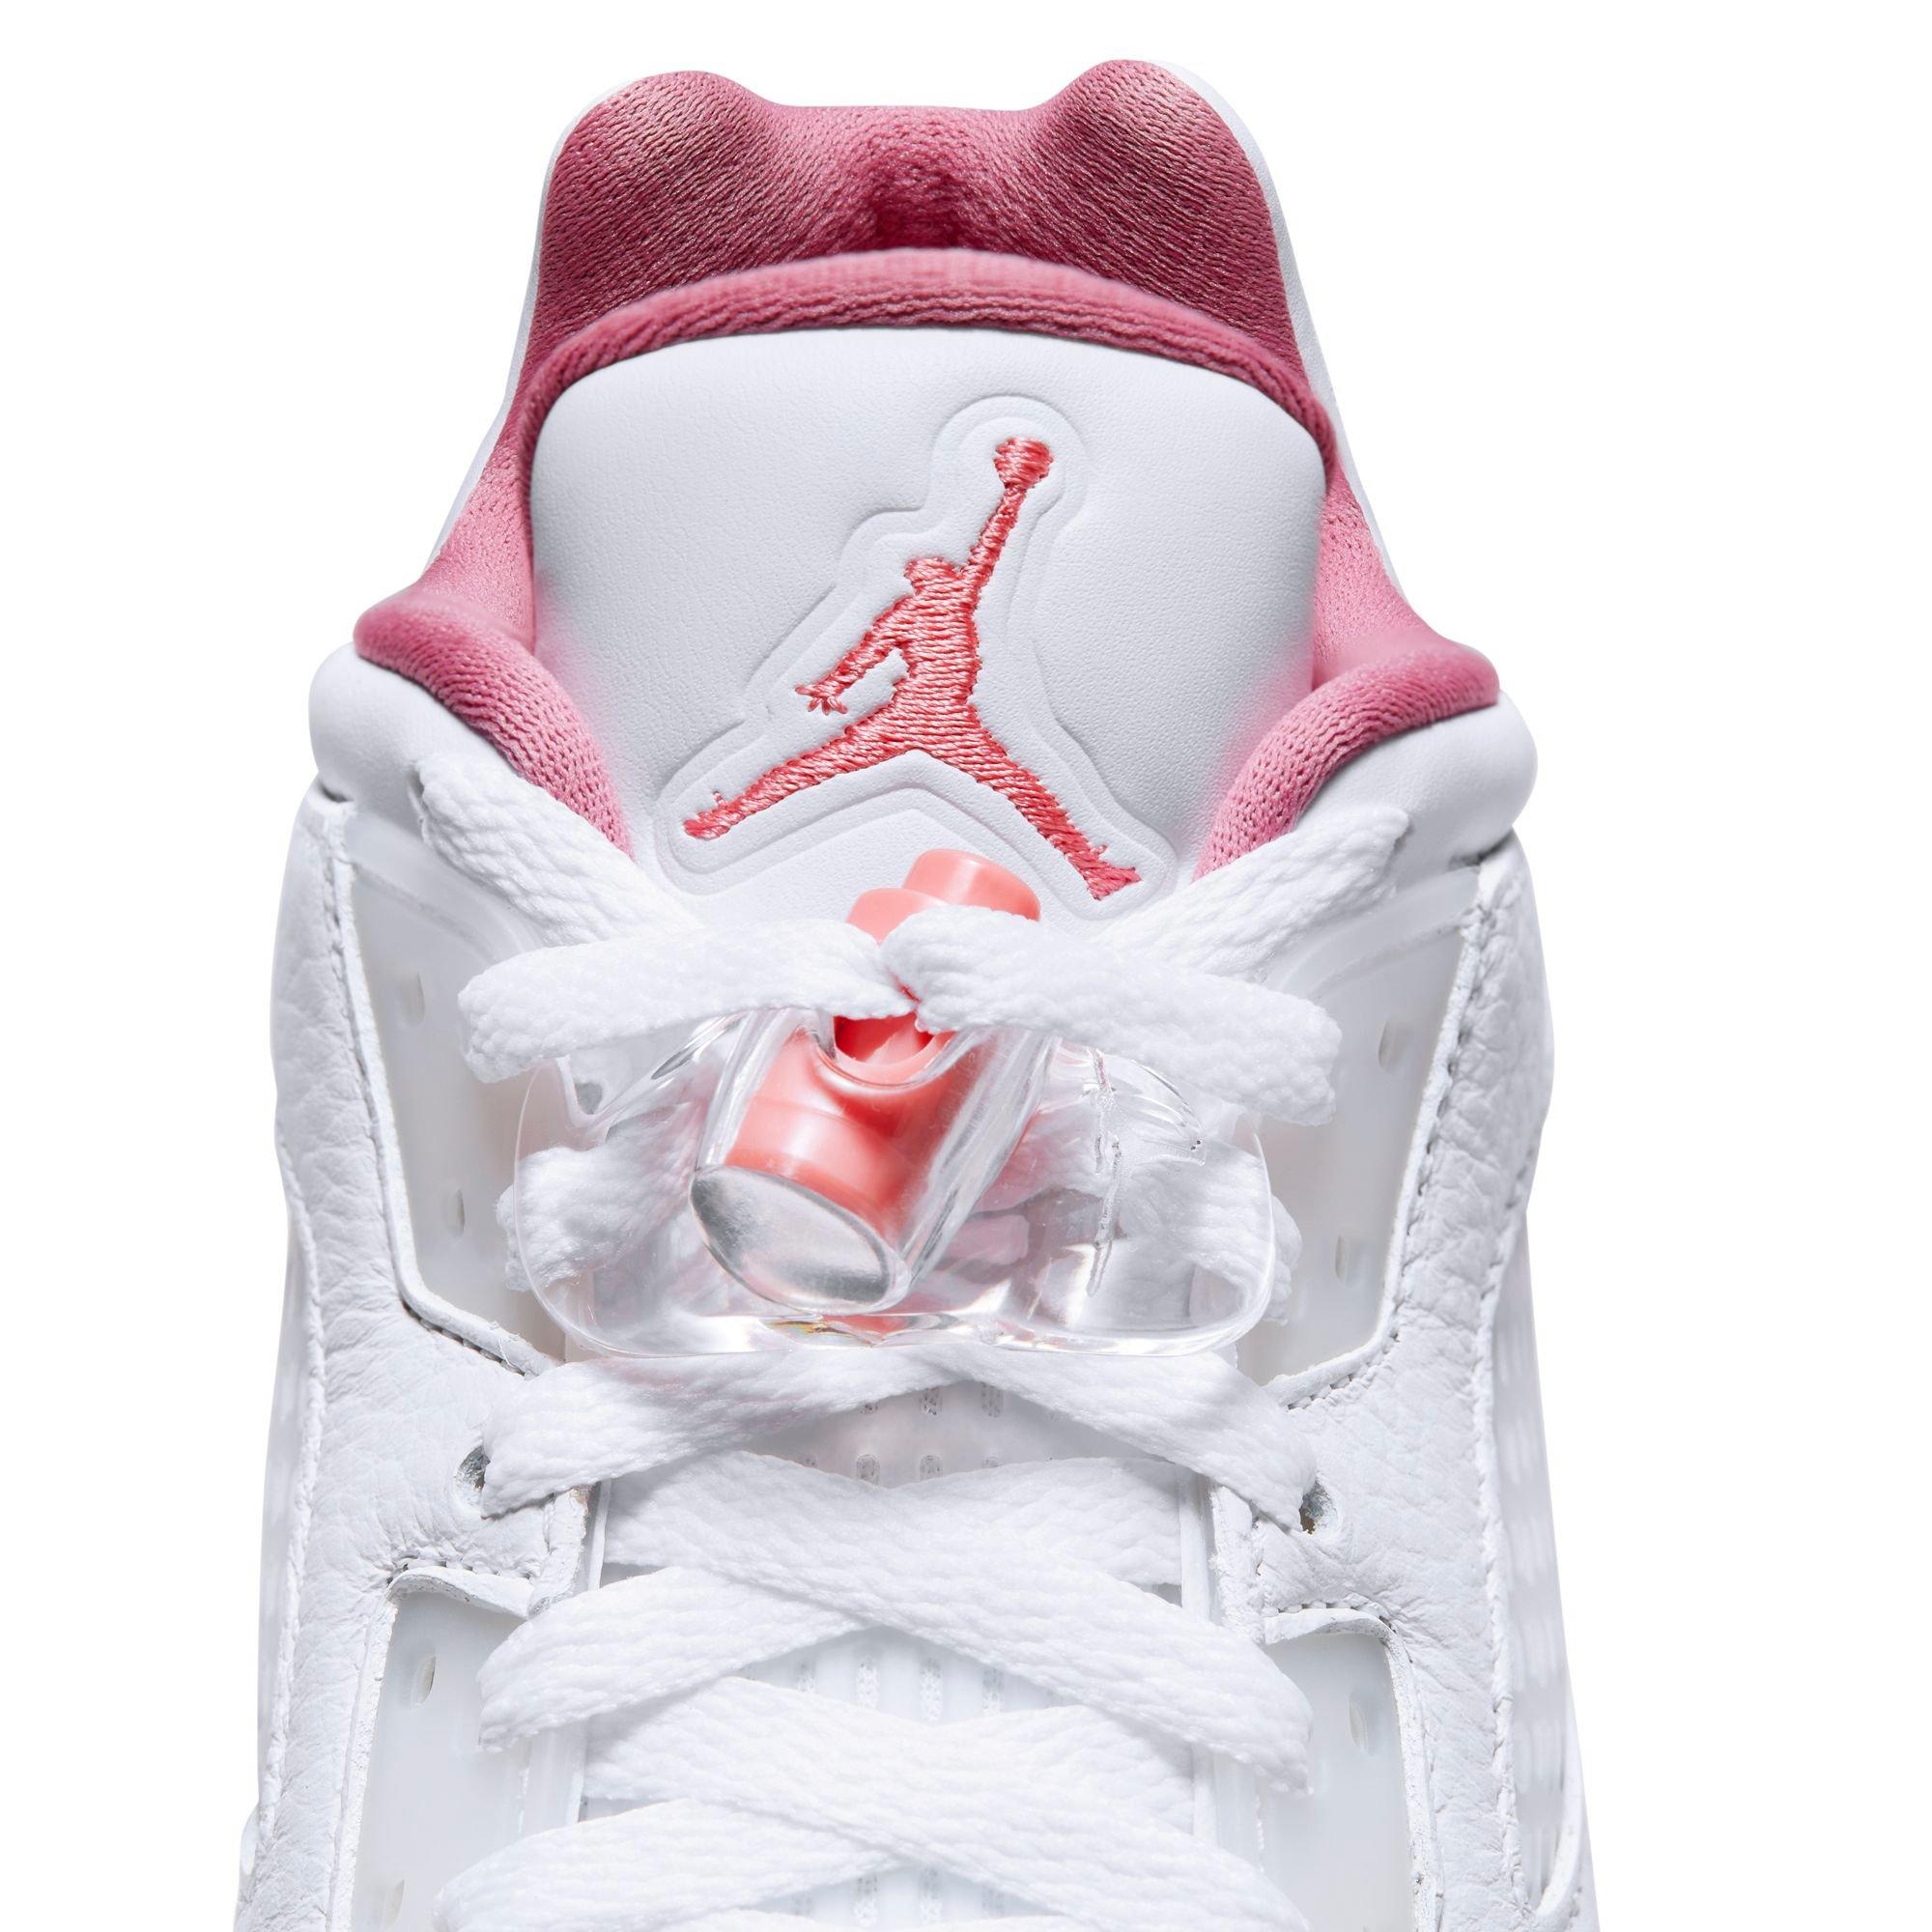 Air Jordan 5 Retro Shoes - Low, Mid, High - Hibbett